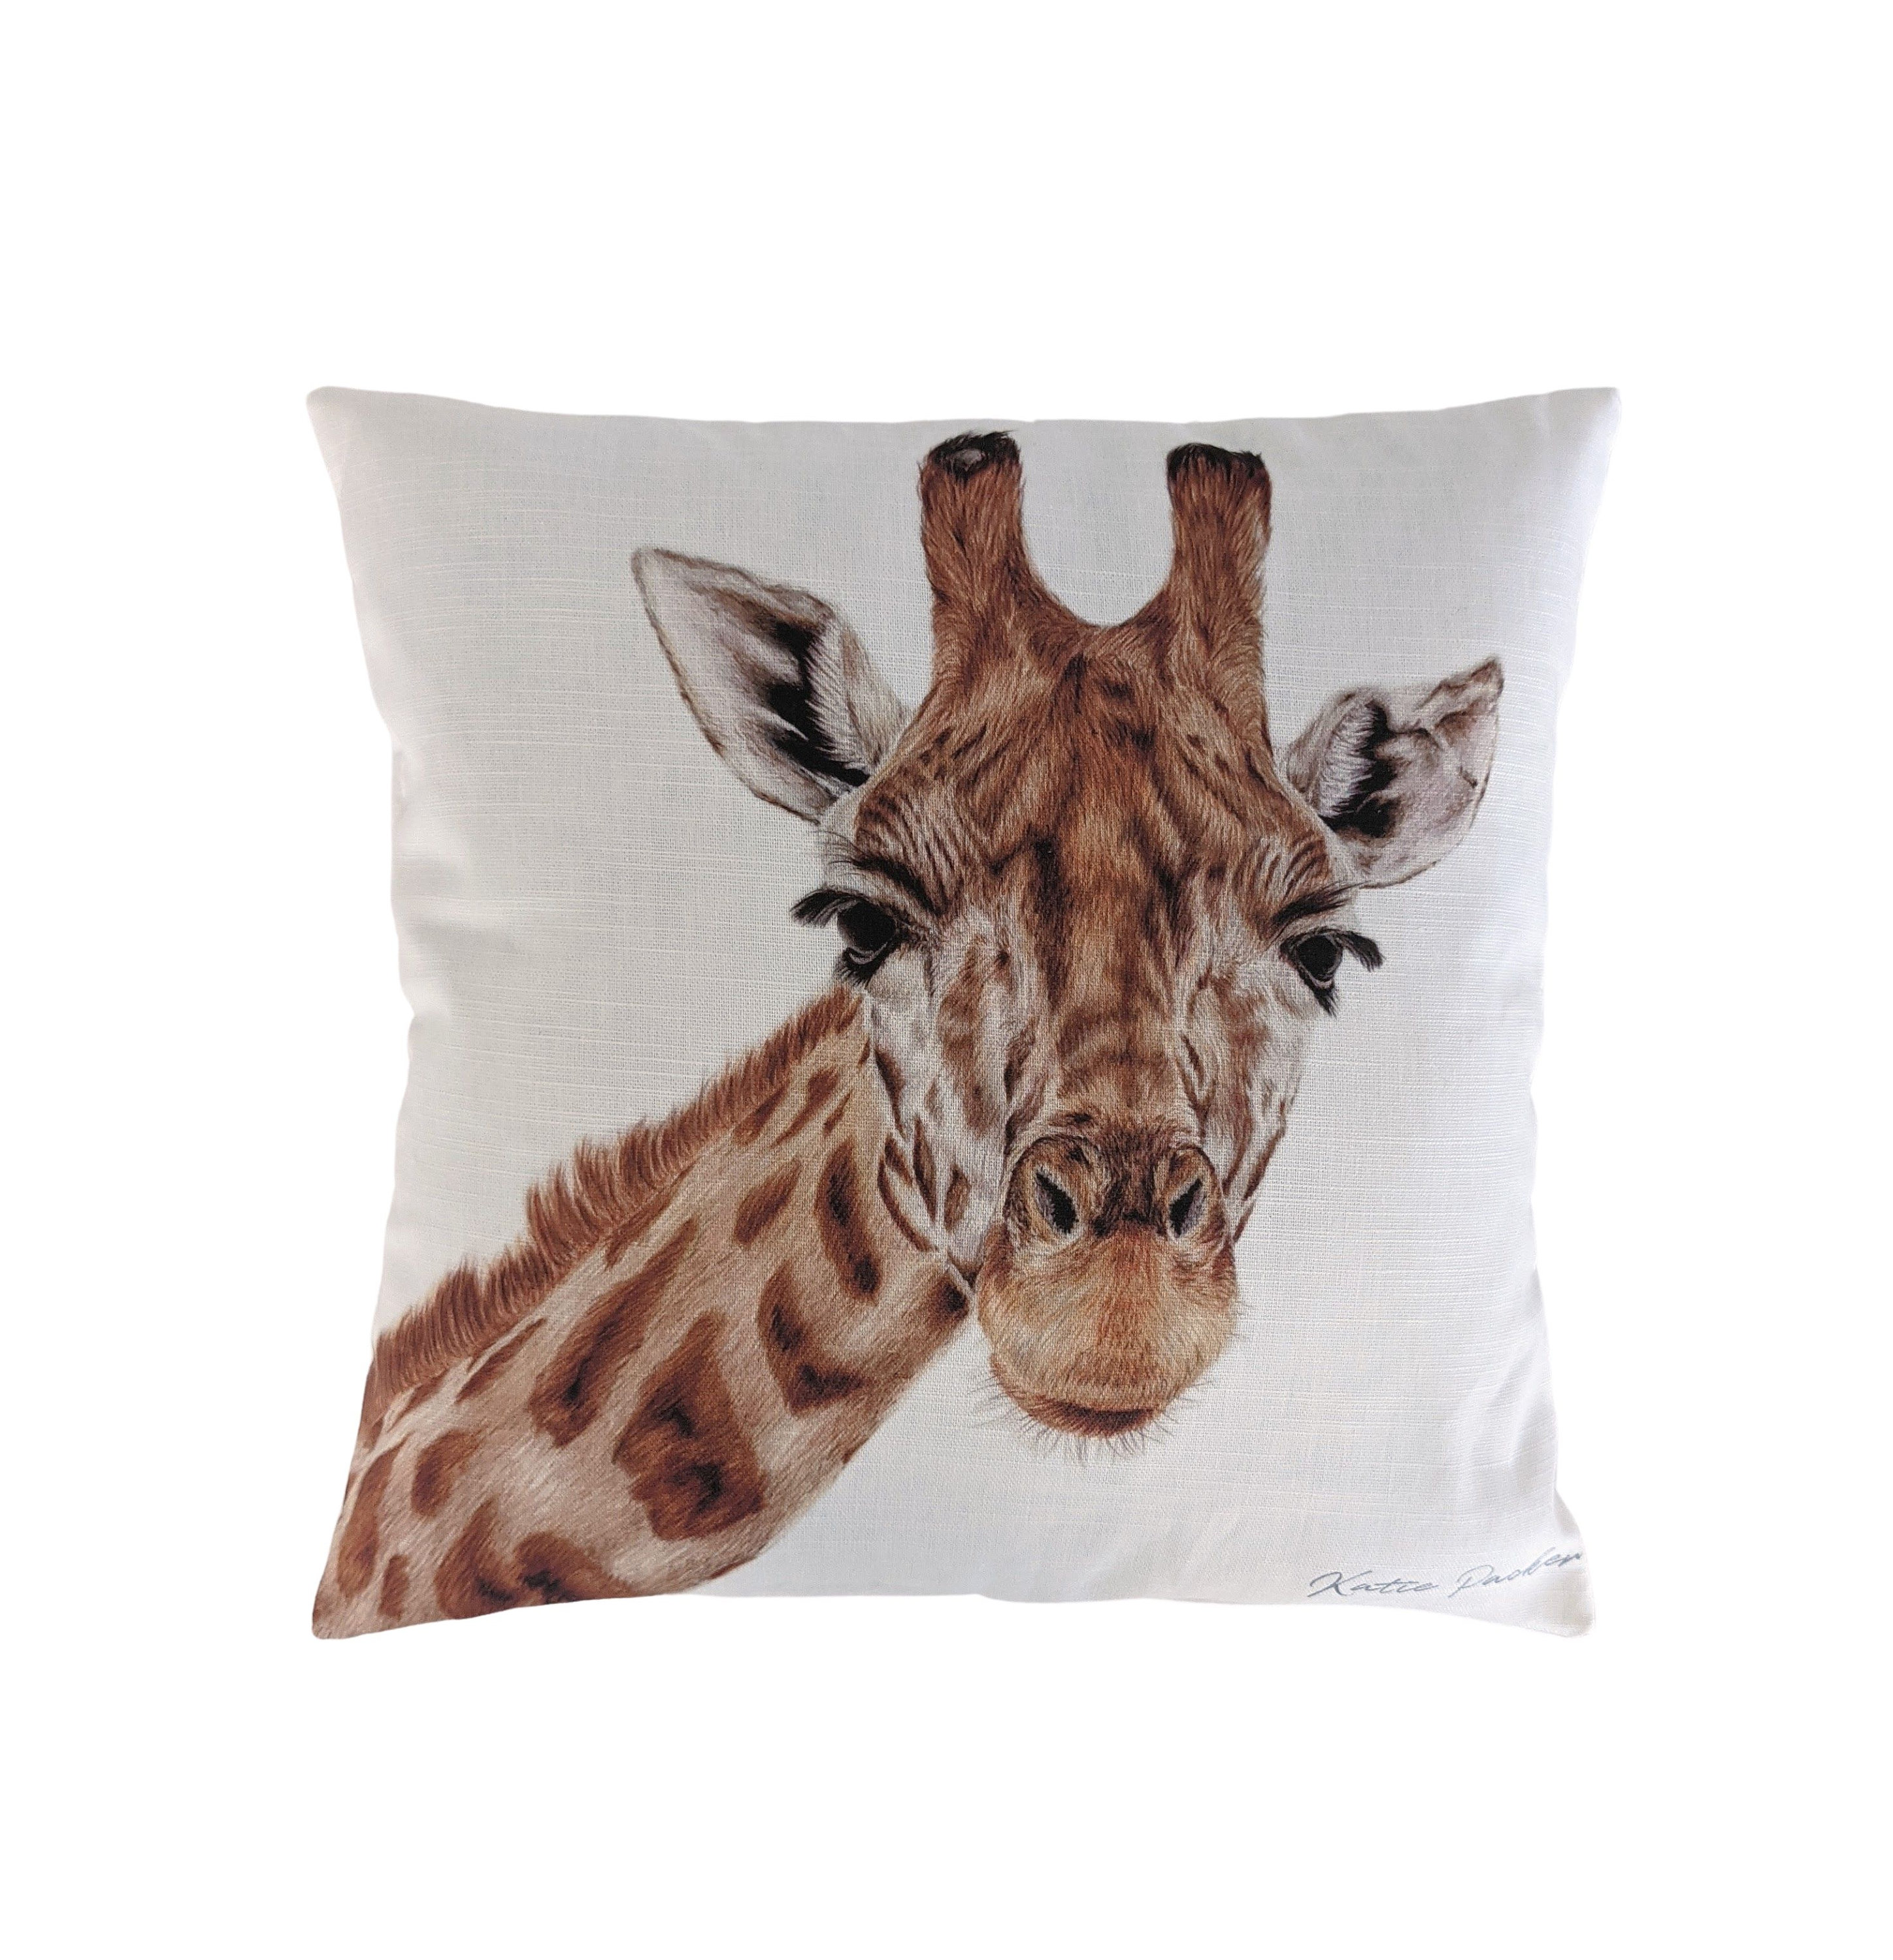 Cushion Cover in Voyage Maison Giraffe 16 -  Sweden